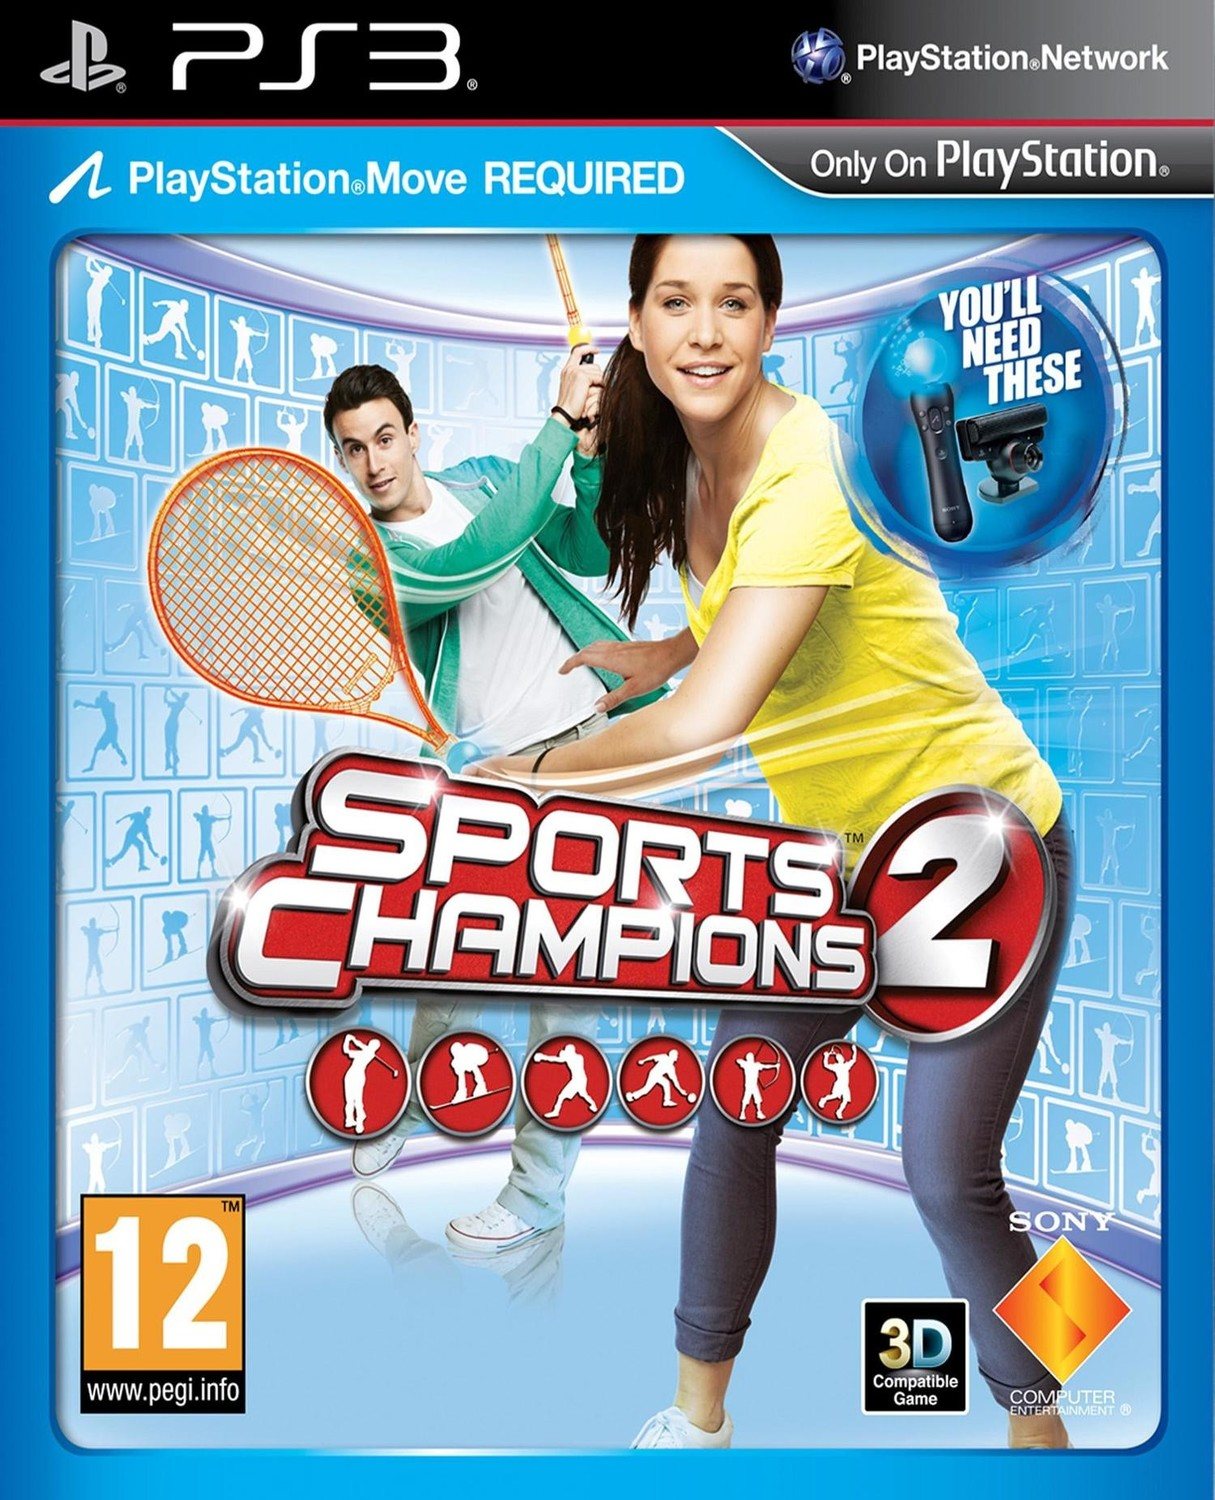 playstation 3 sports games